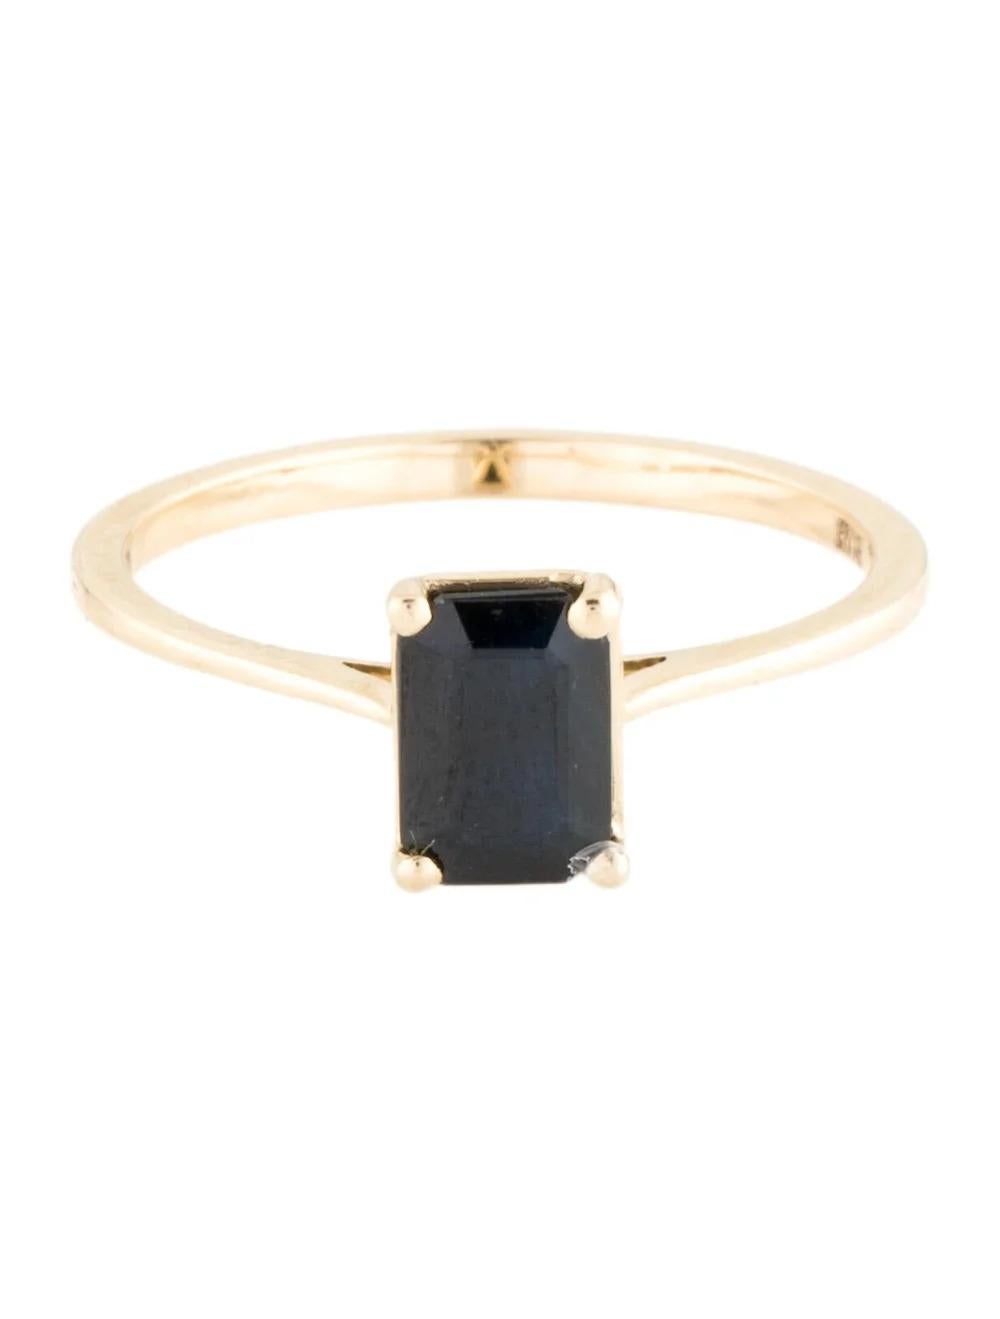 Emerald Cut Designer 14K Sapphire Cocktail Ring - 1.04ct, Size 7, Gemstone Statement Jewelry For Sale